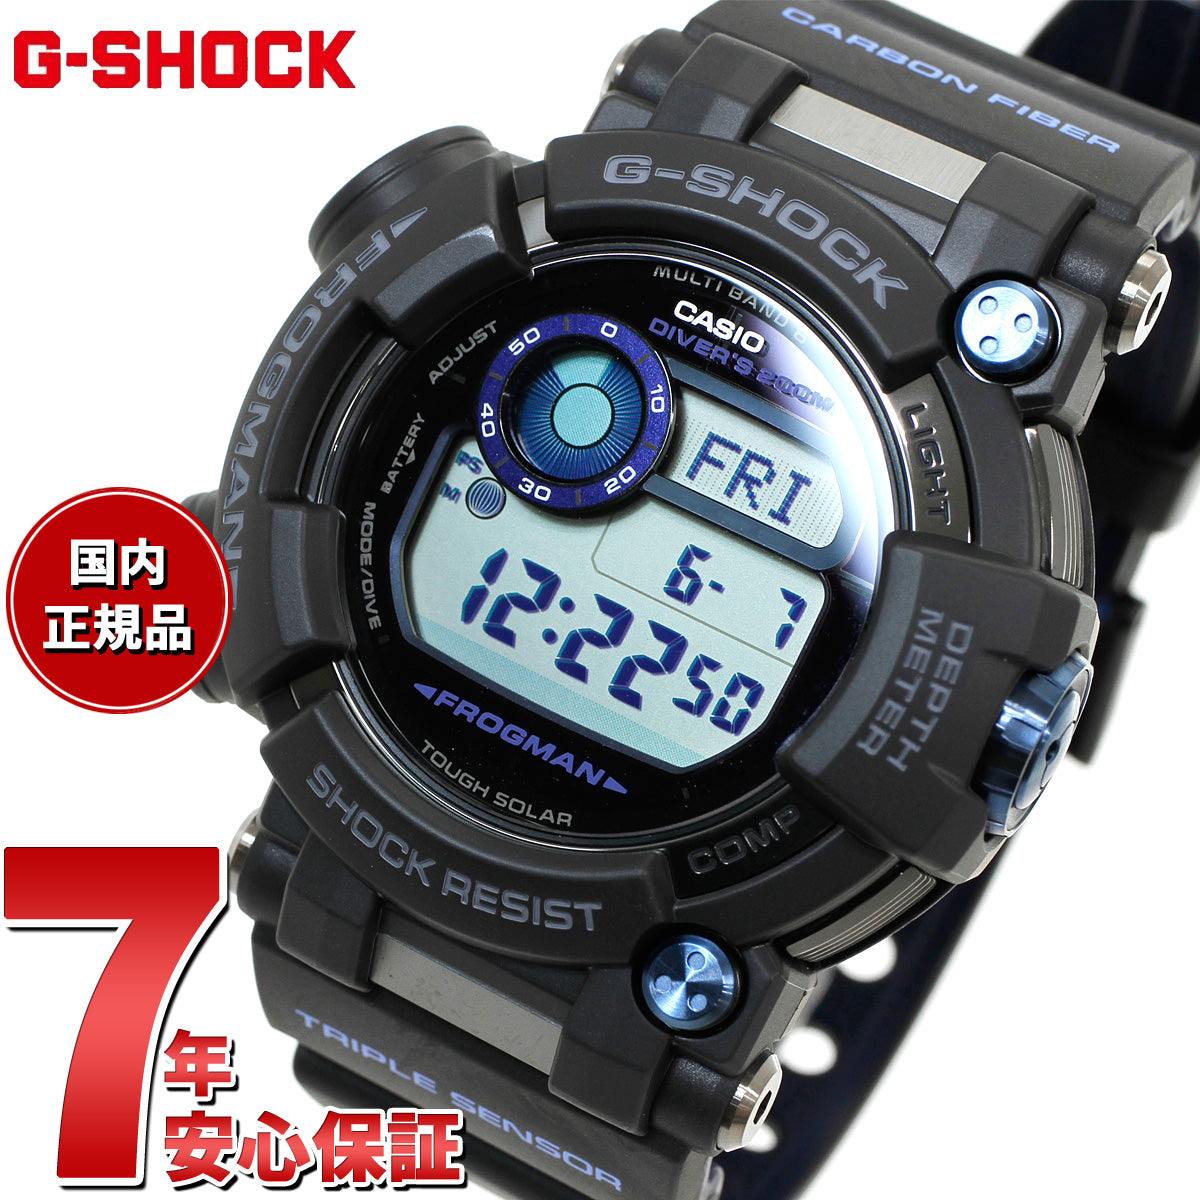 G-SHOCK 電波 ソーラー 電波時計 ブラック カシオ Gショック フロッグマン CASIO FROGMAN 腕時計 メンズ タフソーラー  デジタル GWF-D1000B-1JF